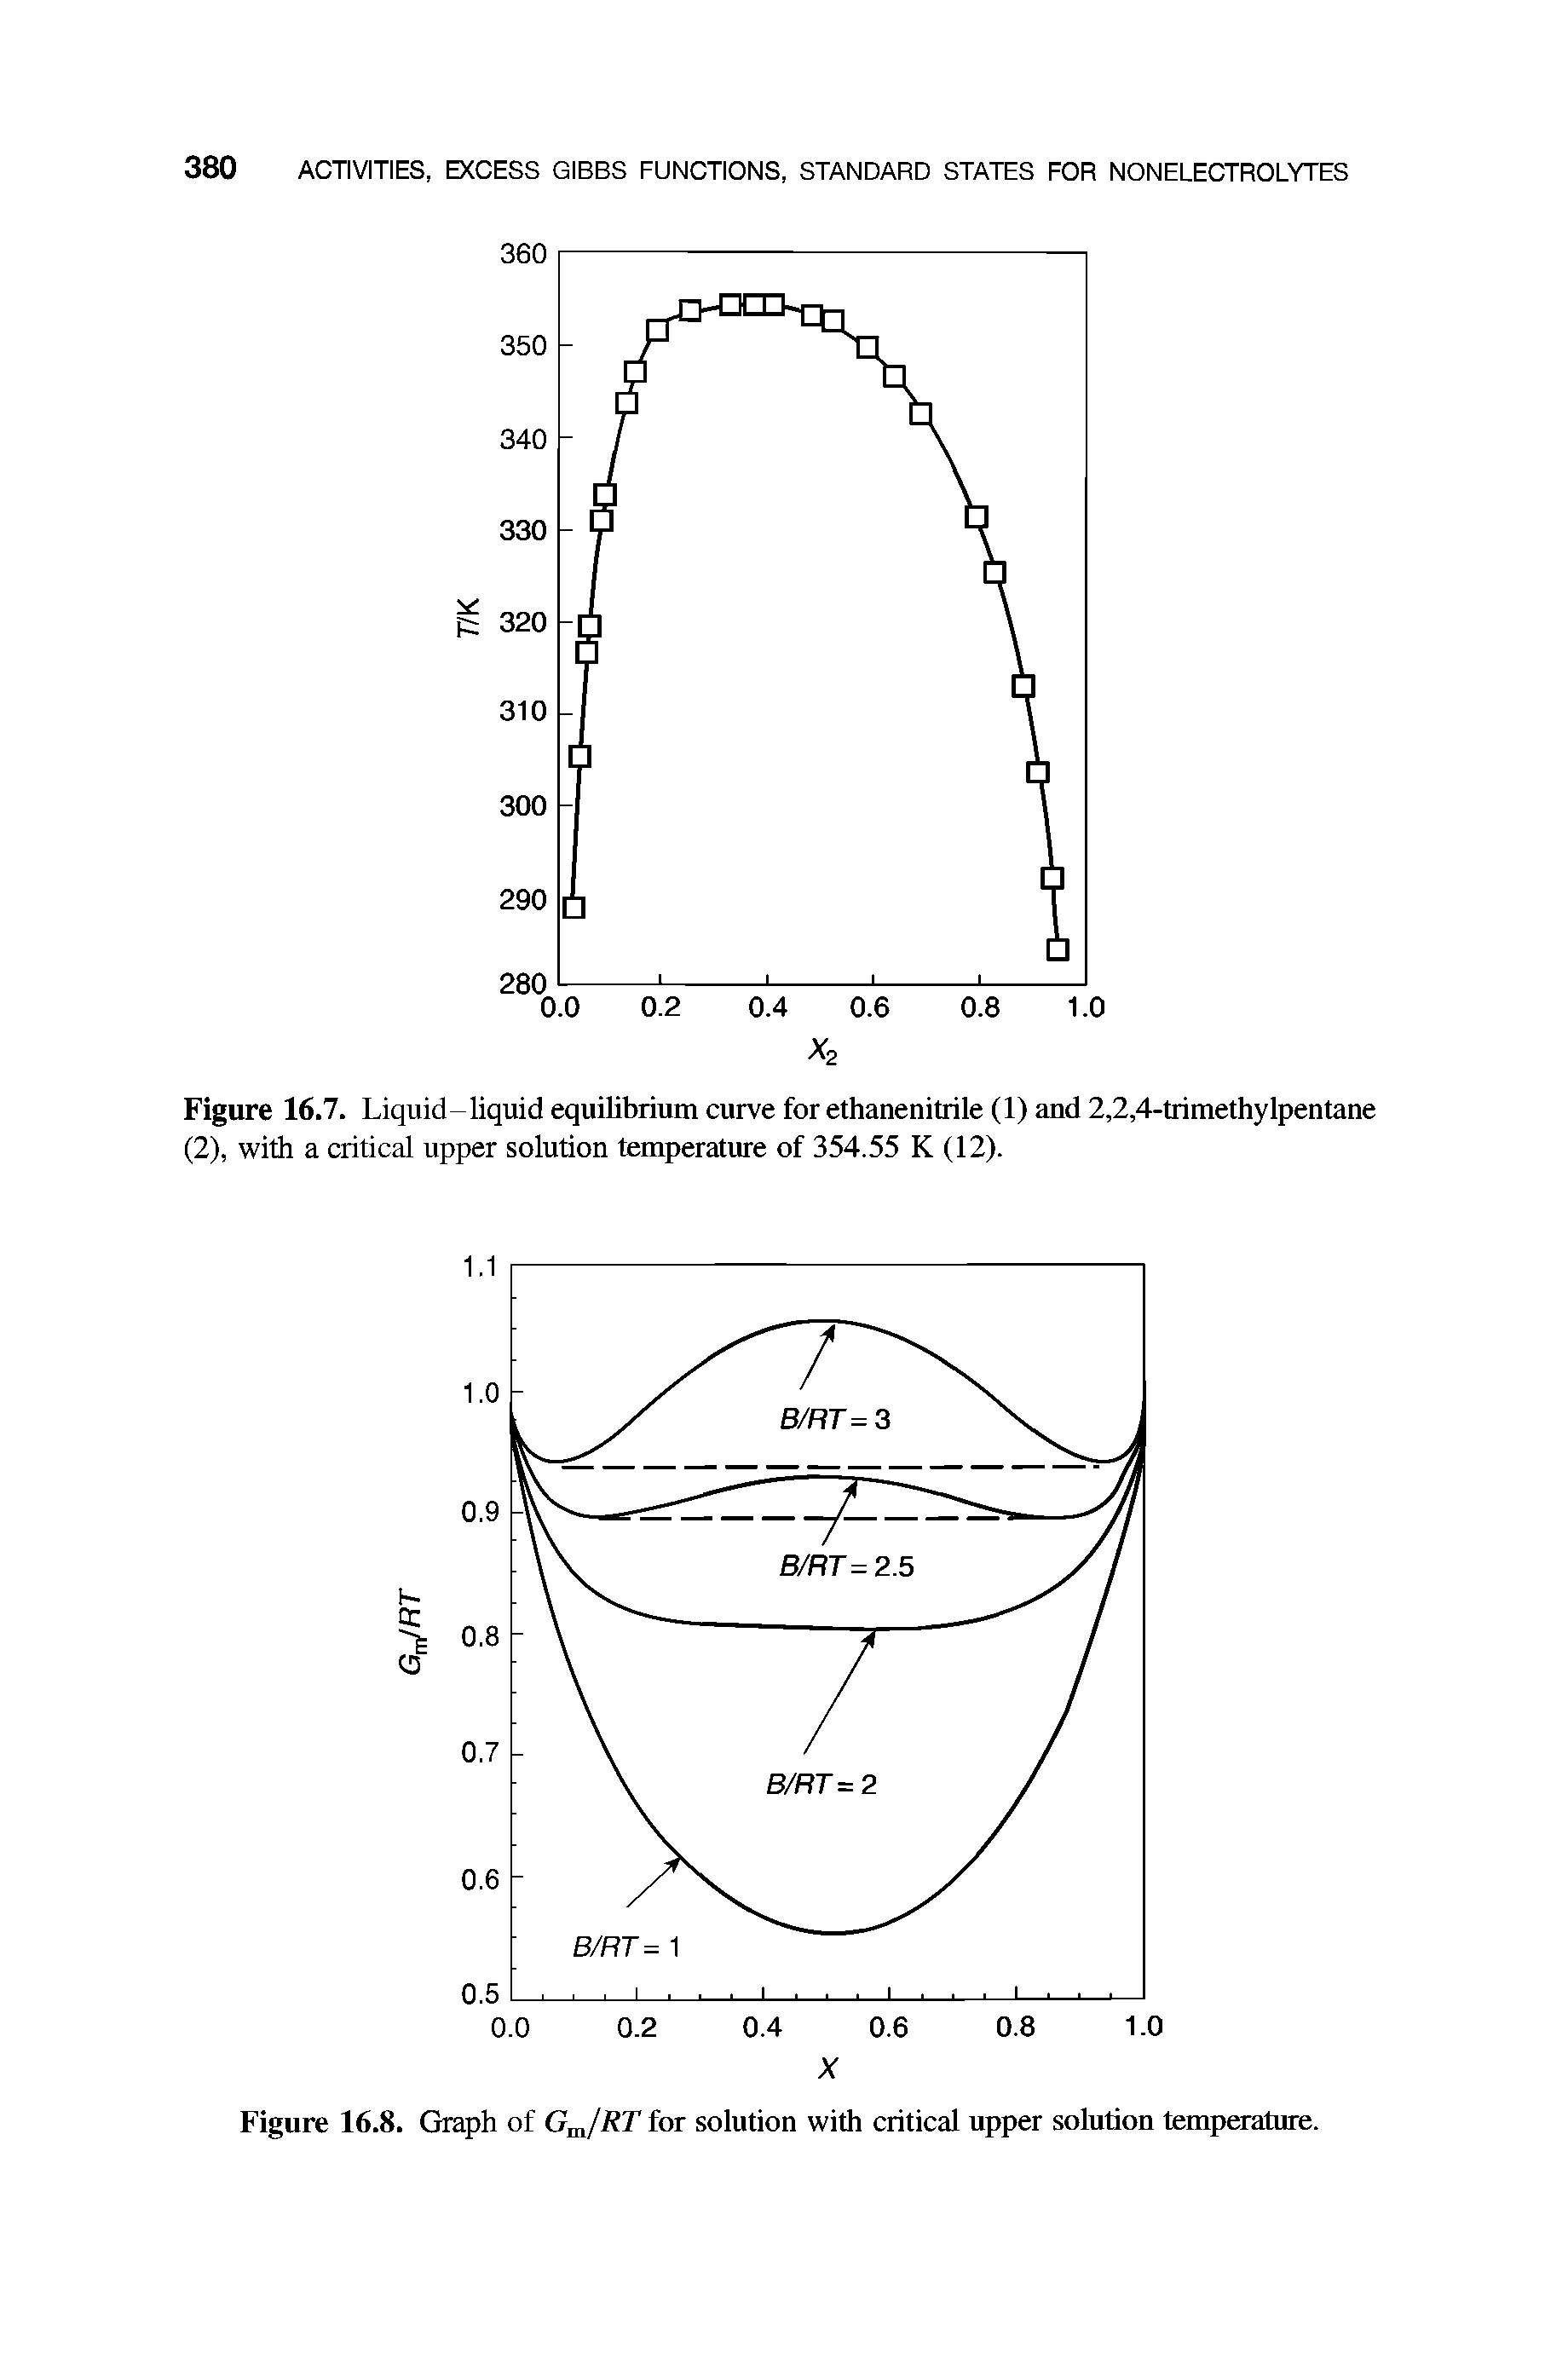 Figure 16.7. Liquid-liquid equilibrium curve for ethanenitrile (1) and 2,2,4-trimethylpentane (2), with a critical upper solution temperature of 354.55 K (12).